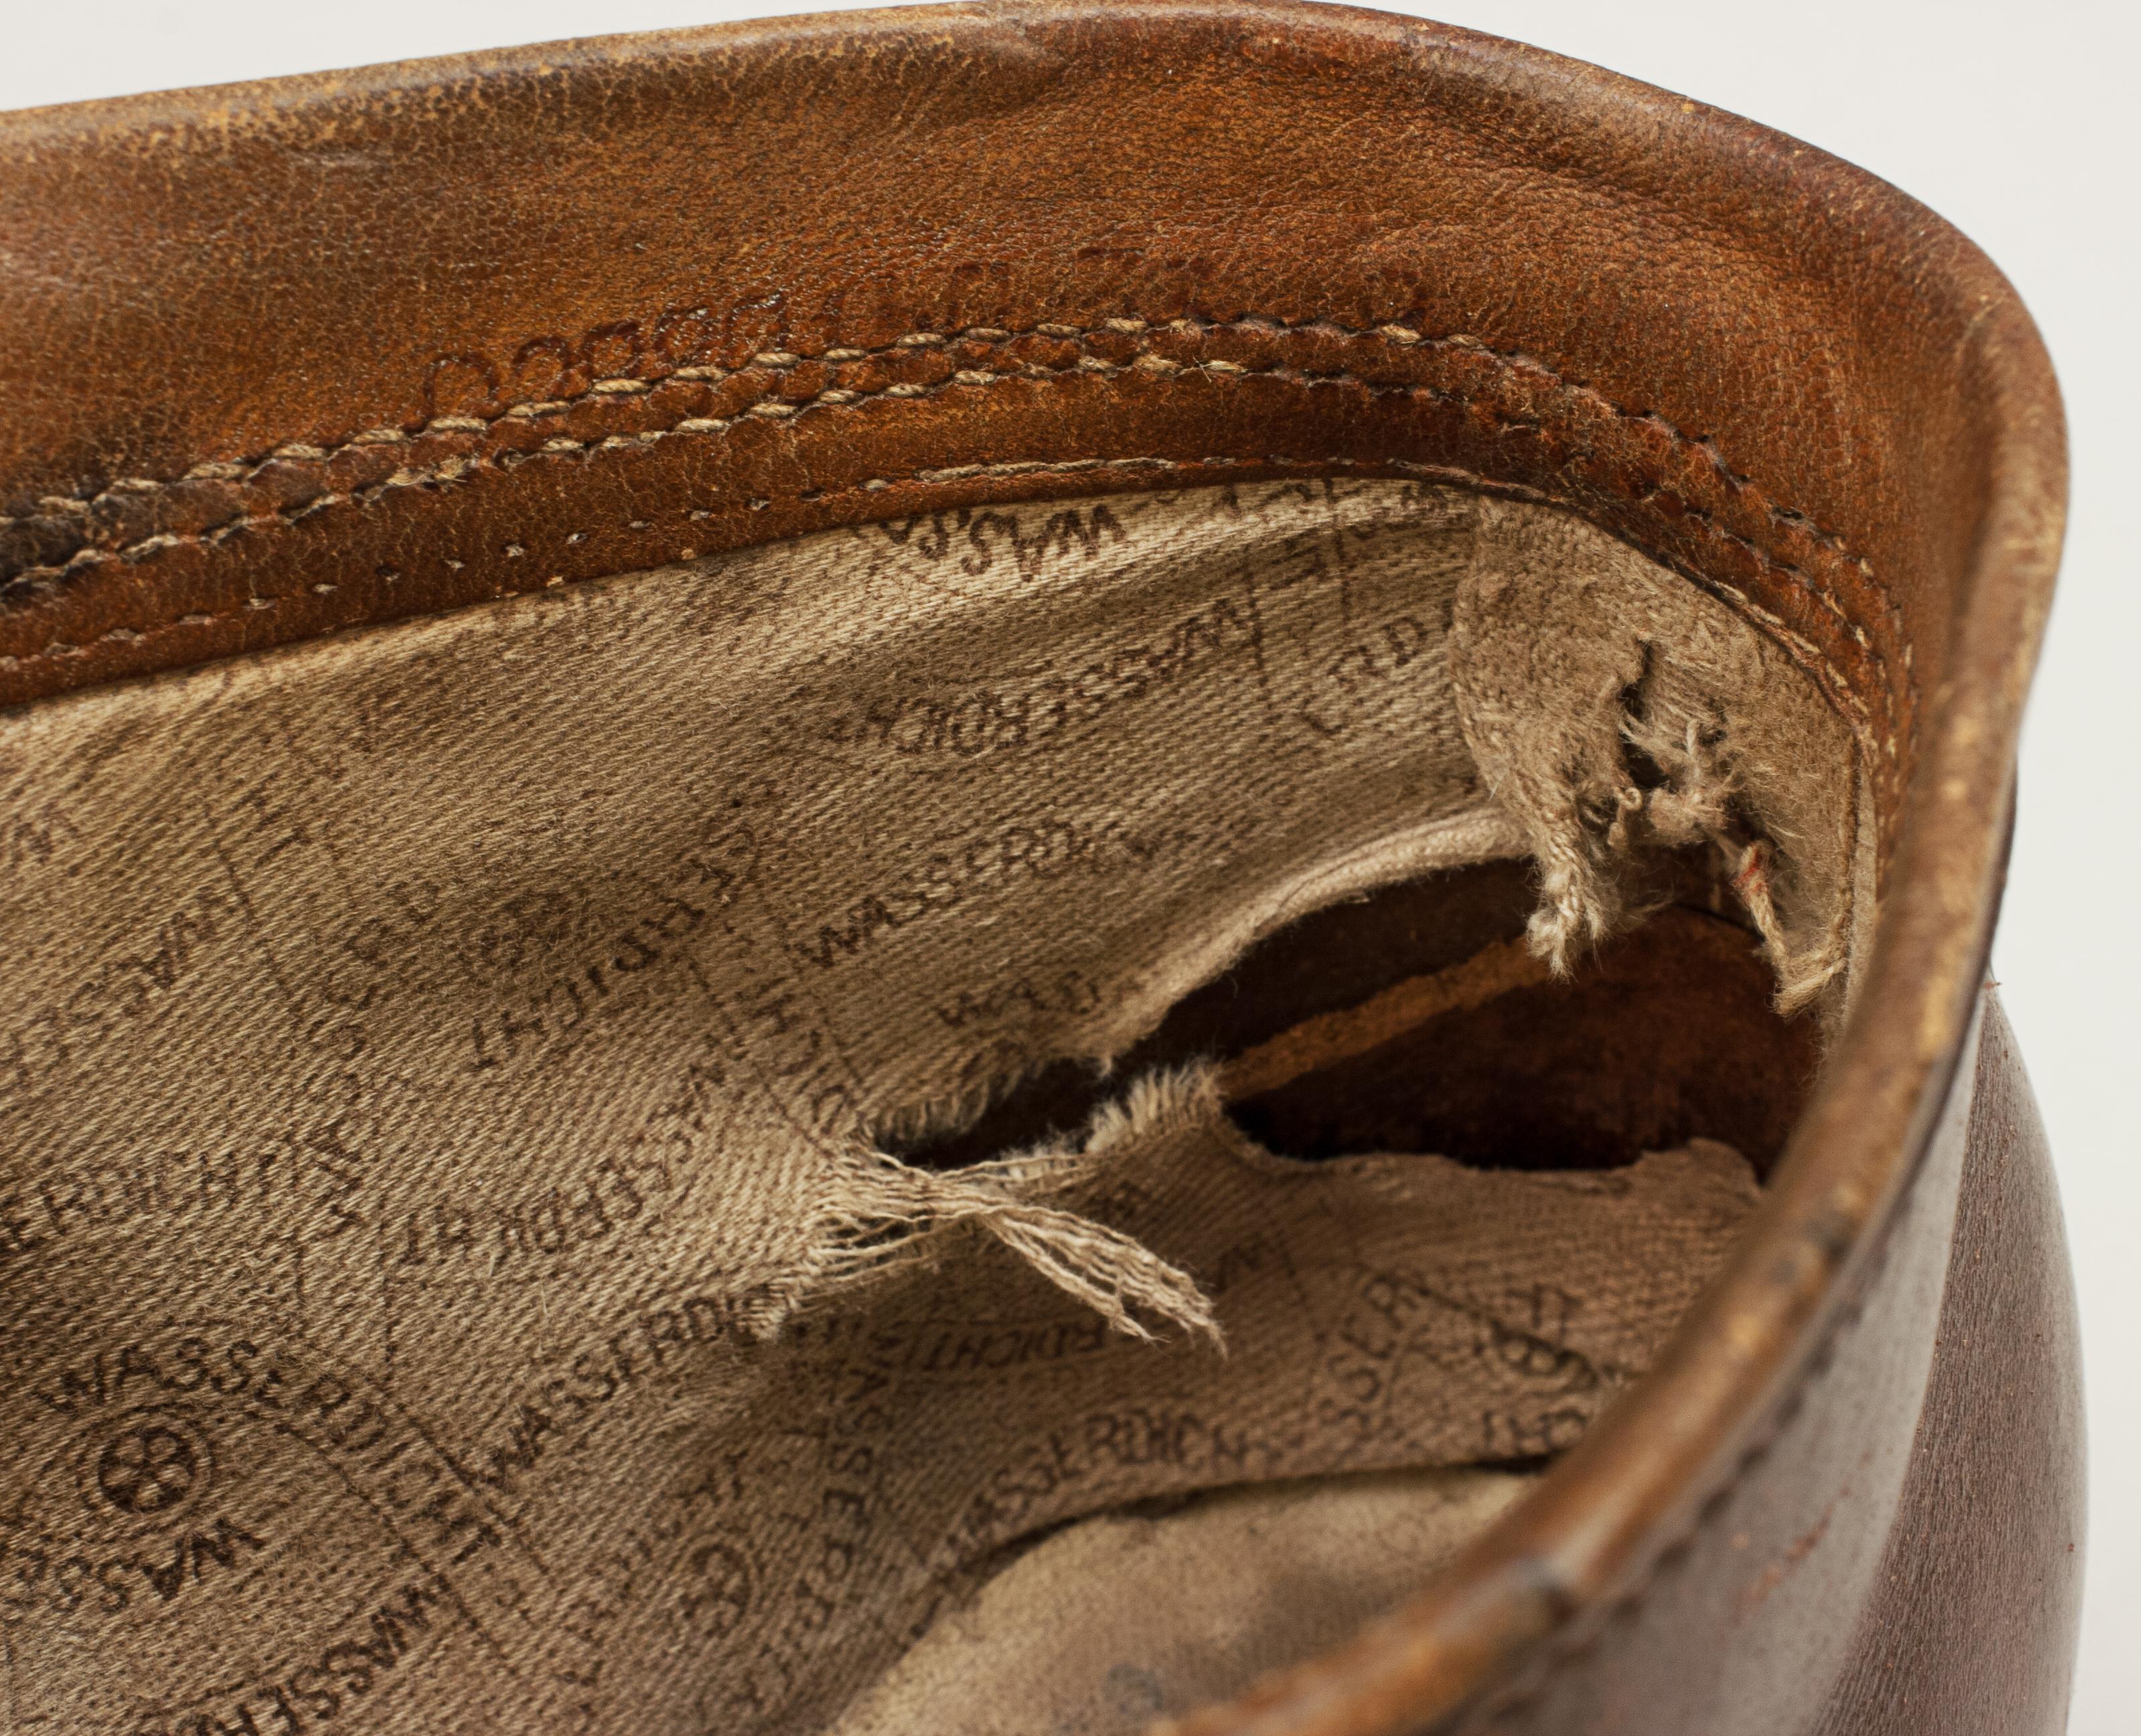 Pair of Vintage Children's Ski Boots in Leather, Wasserdicht For Sale 3